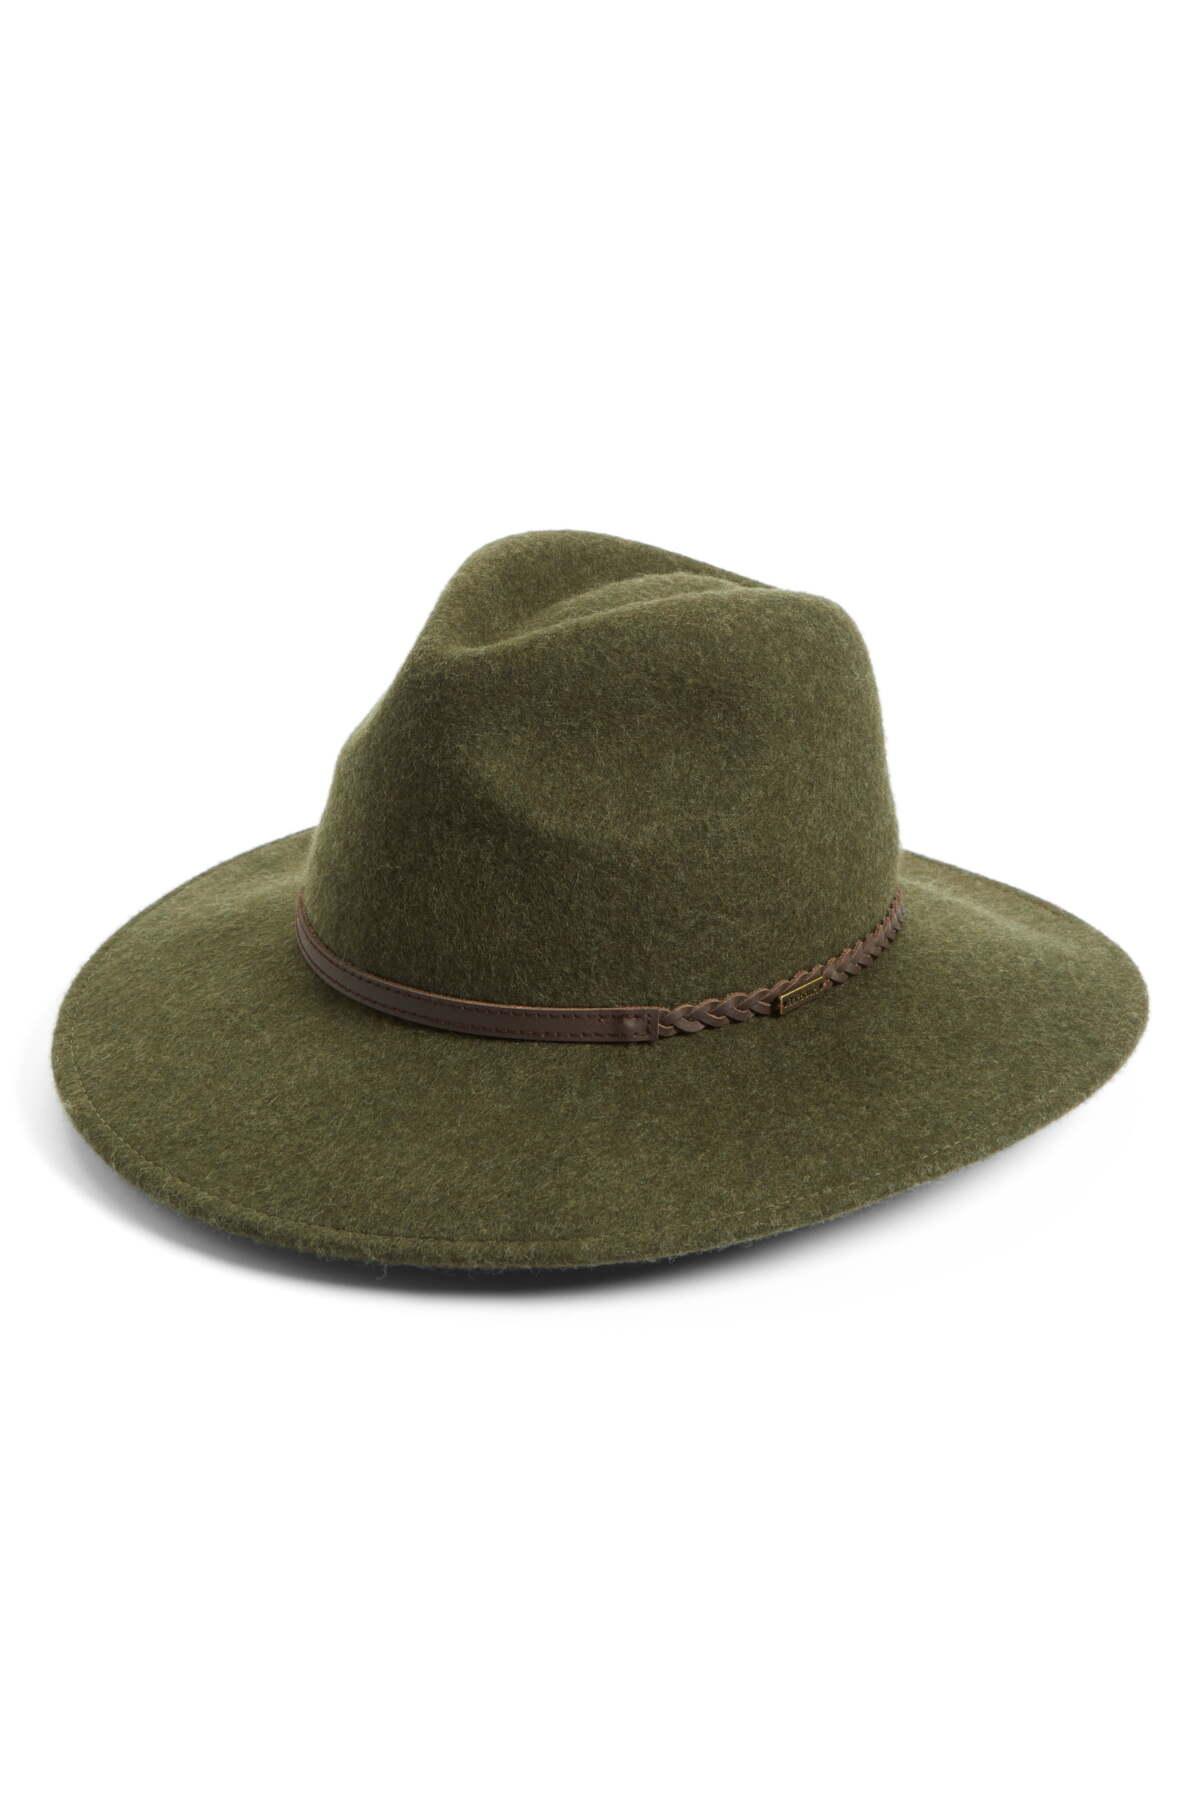 Barbour Tack Felted Wool Fedora in Olive Melange (Green) - Lyst